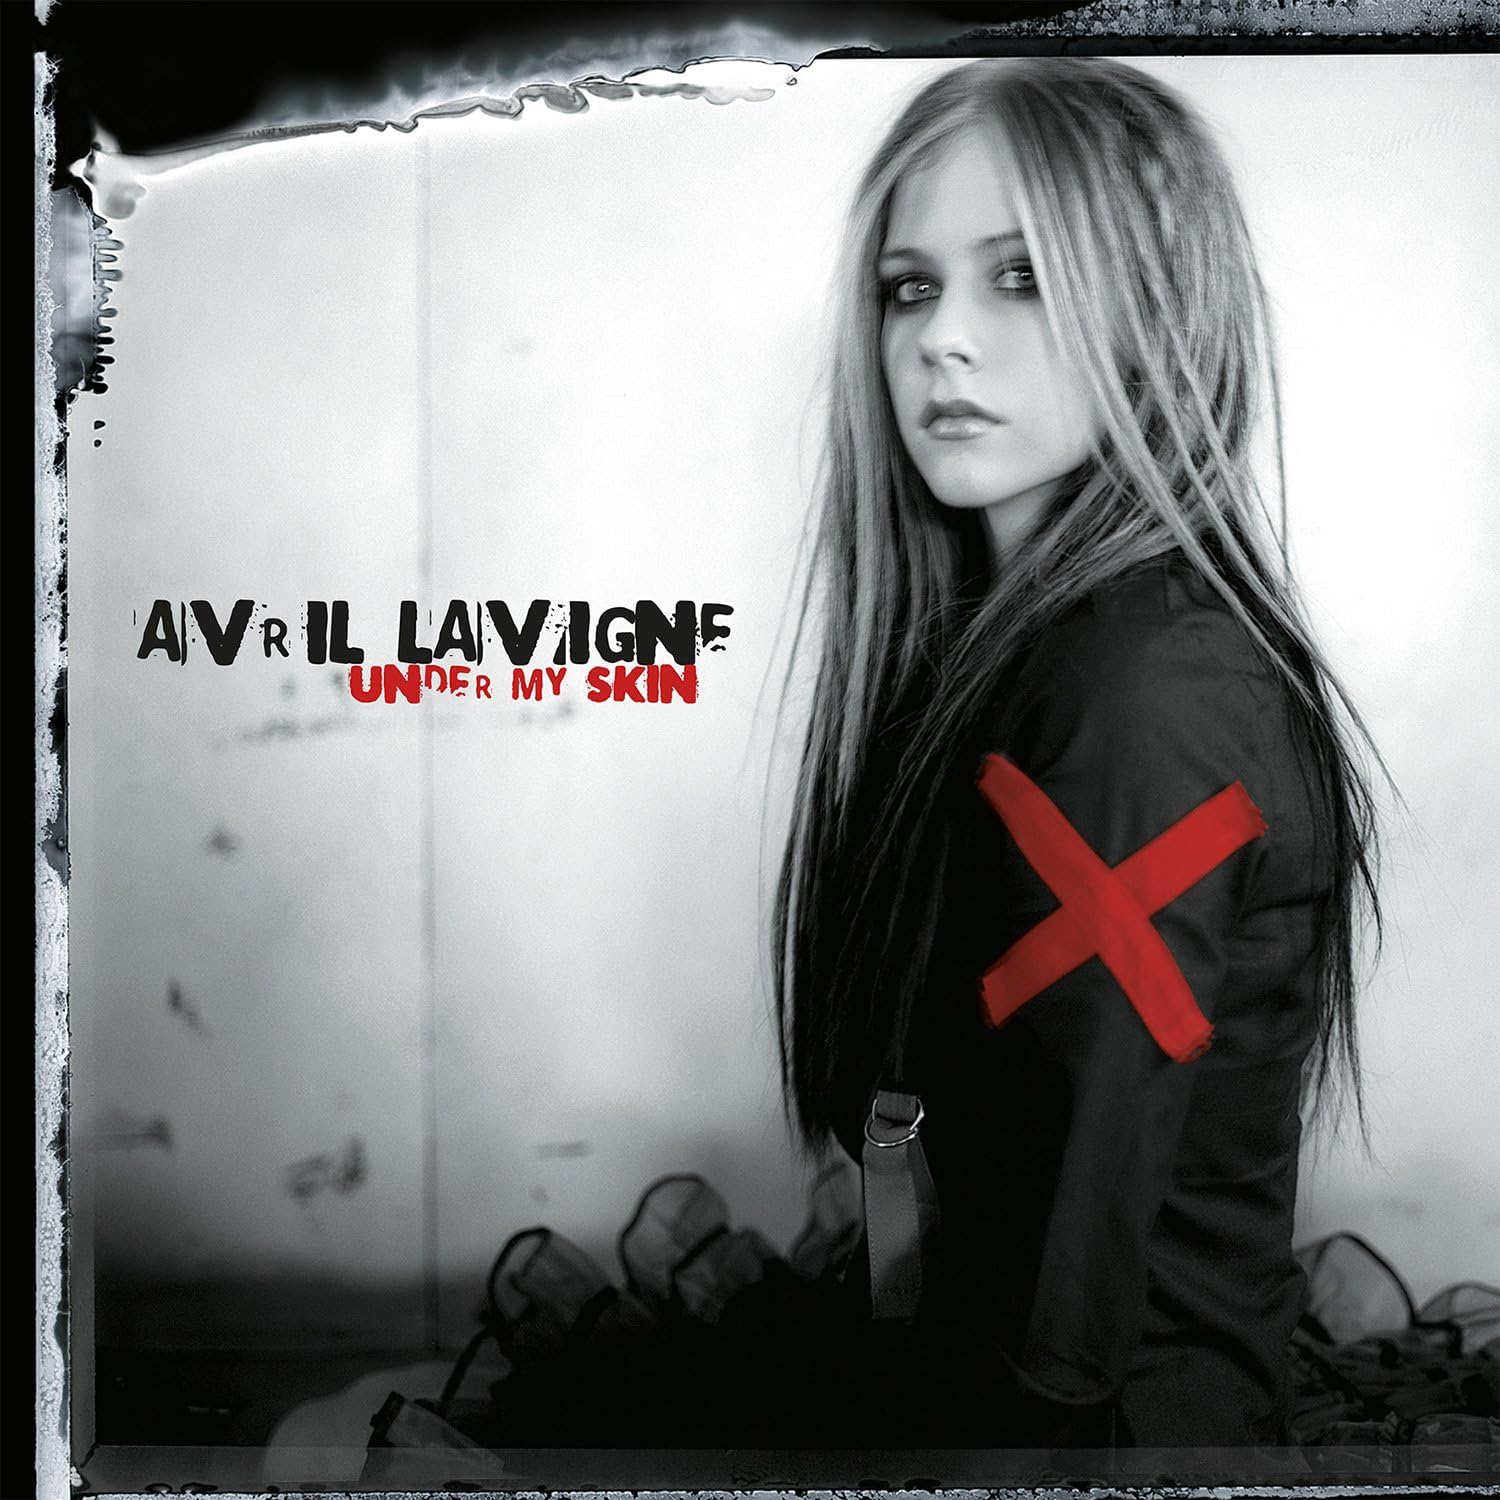 Avril Lavigne "Under My Skin" Vinyl (Music On Vinyl pressing)